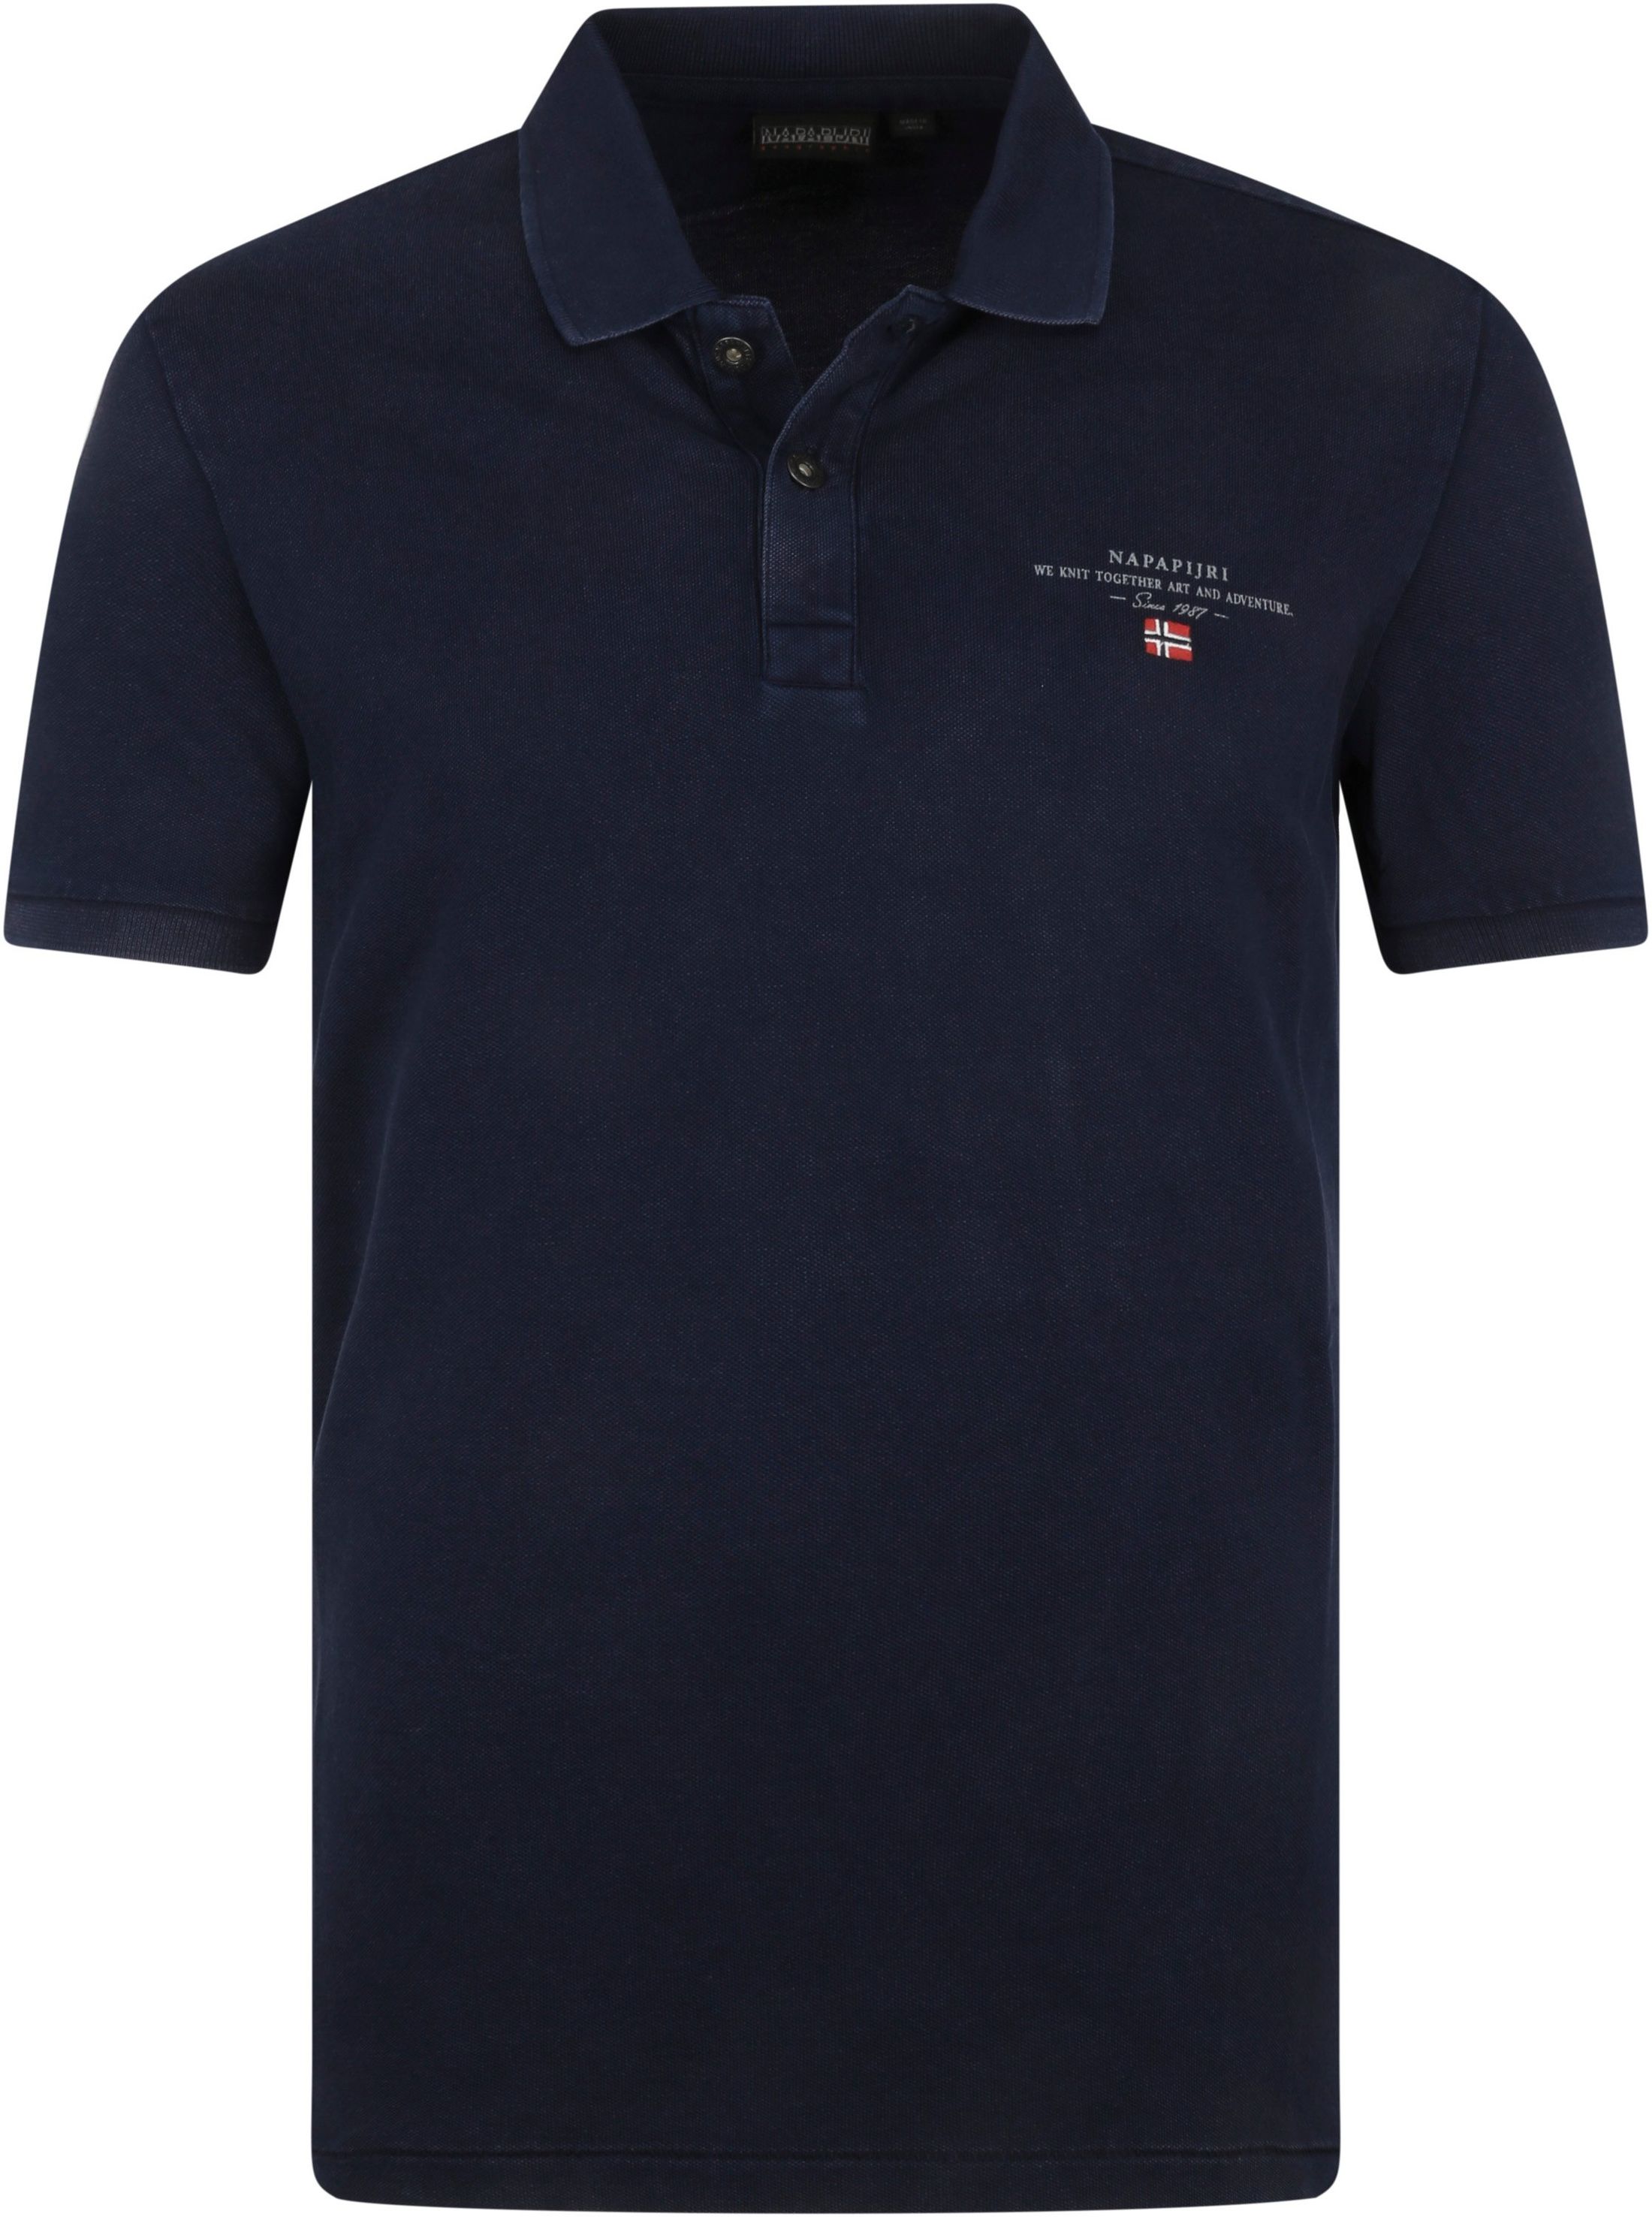 Napapijri Polo Shirt Elbas Navy Dark Blue Blue size 3XL